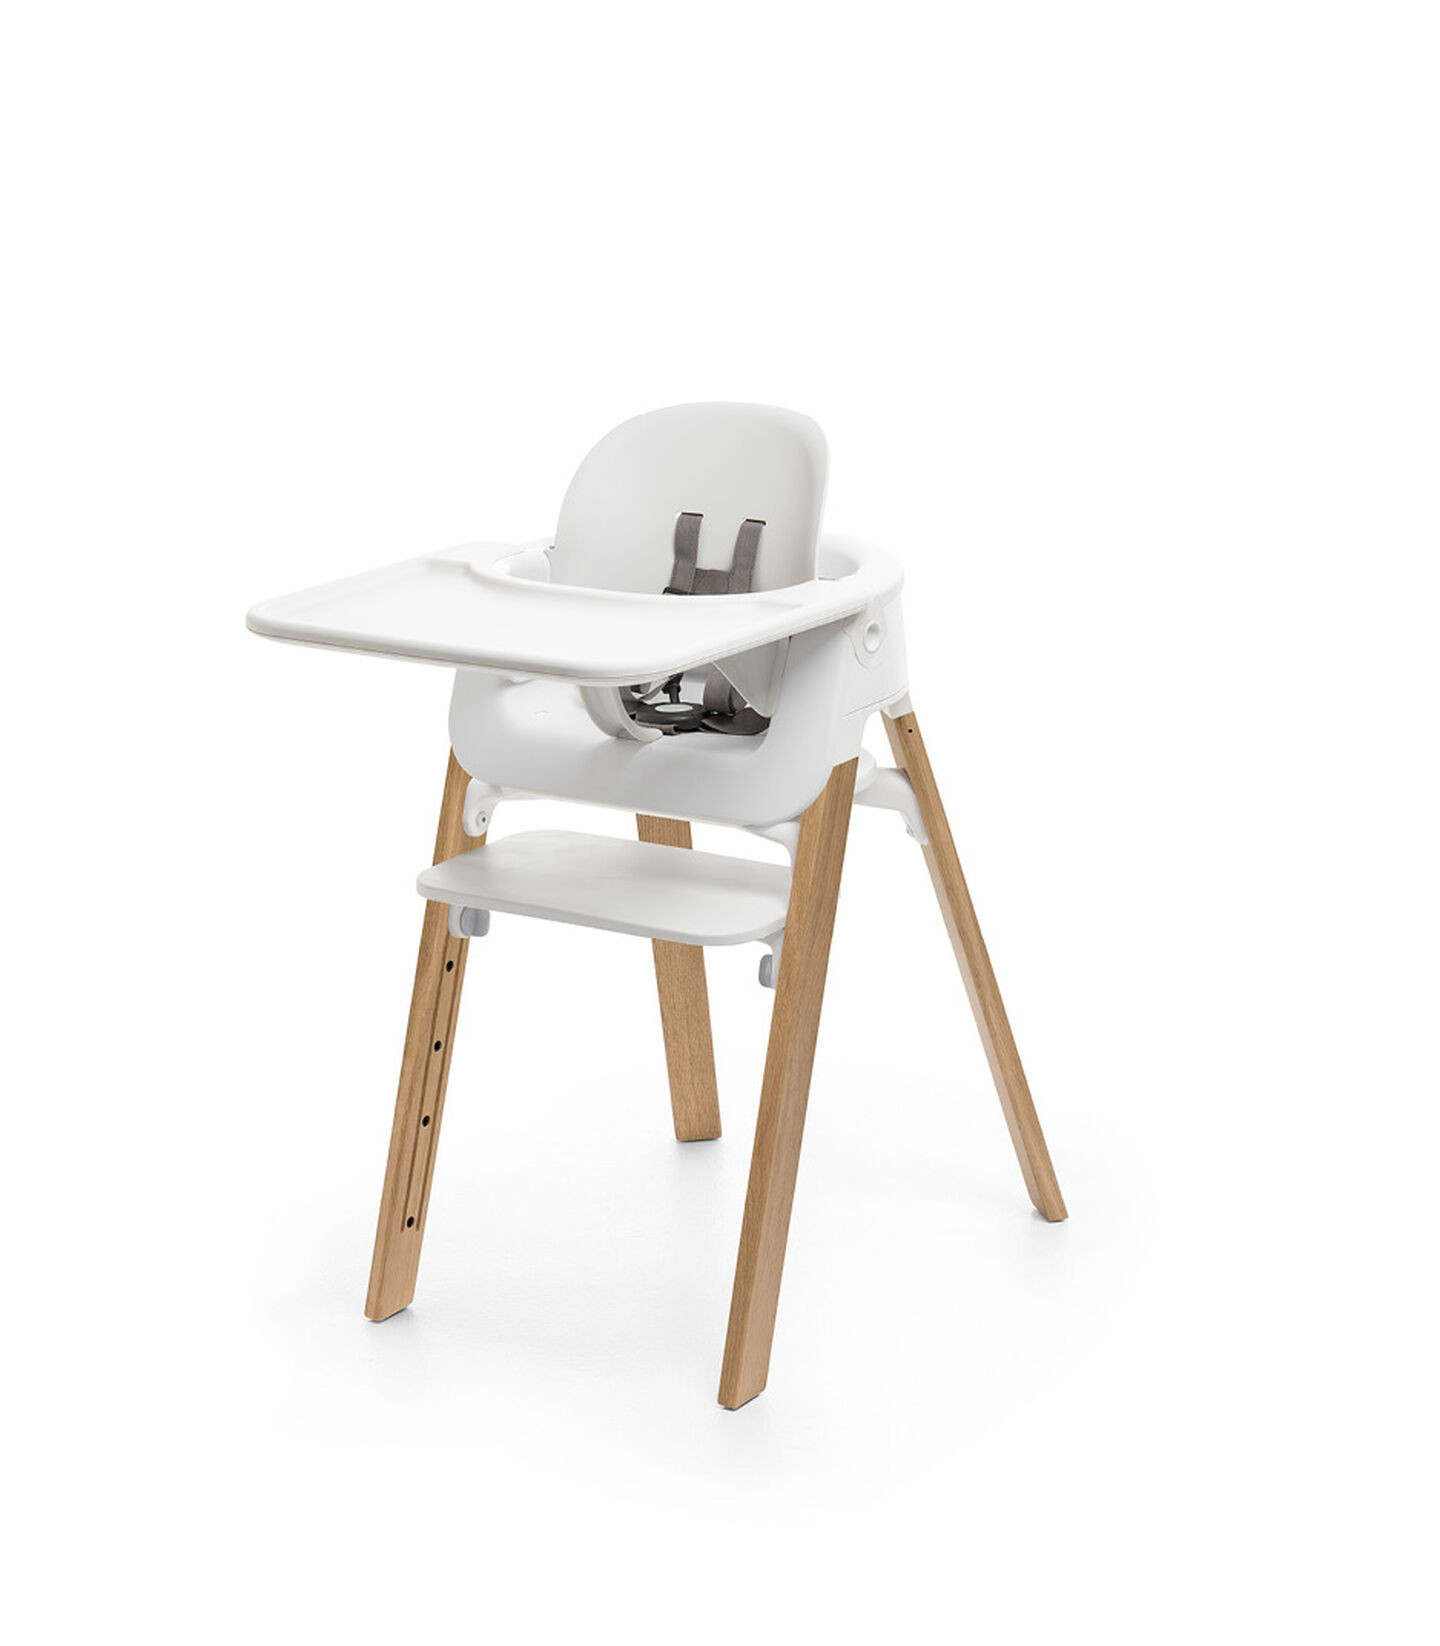 Stokke® Steps™ Doğal Renk Sandalye, Beyaz/Naturel, mainview view 5